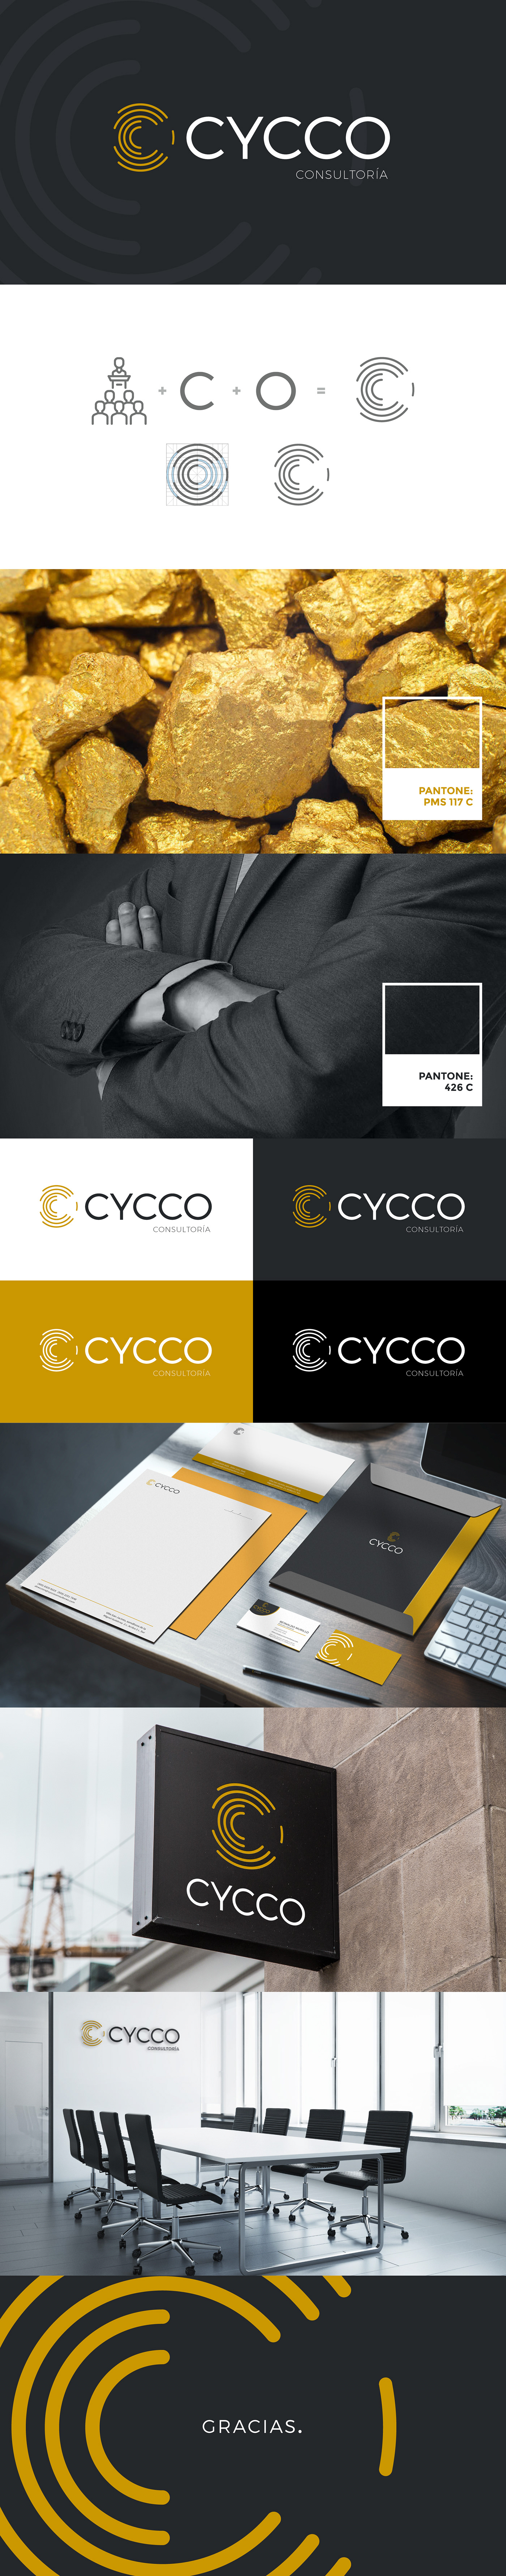 branding  logo nicaragua law consultancy Office isotype rebranding lawyer cycco